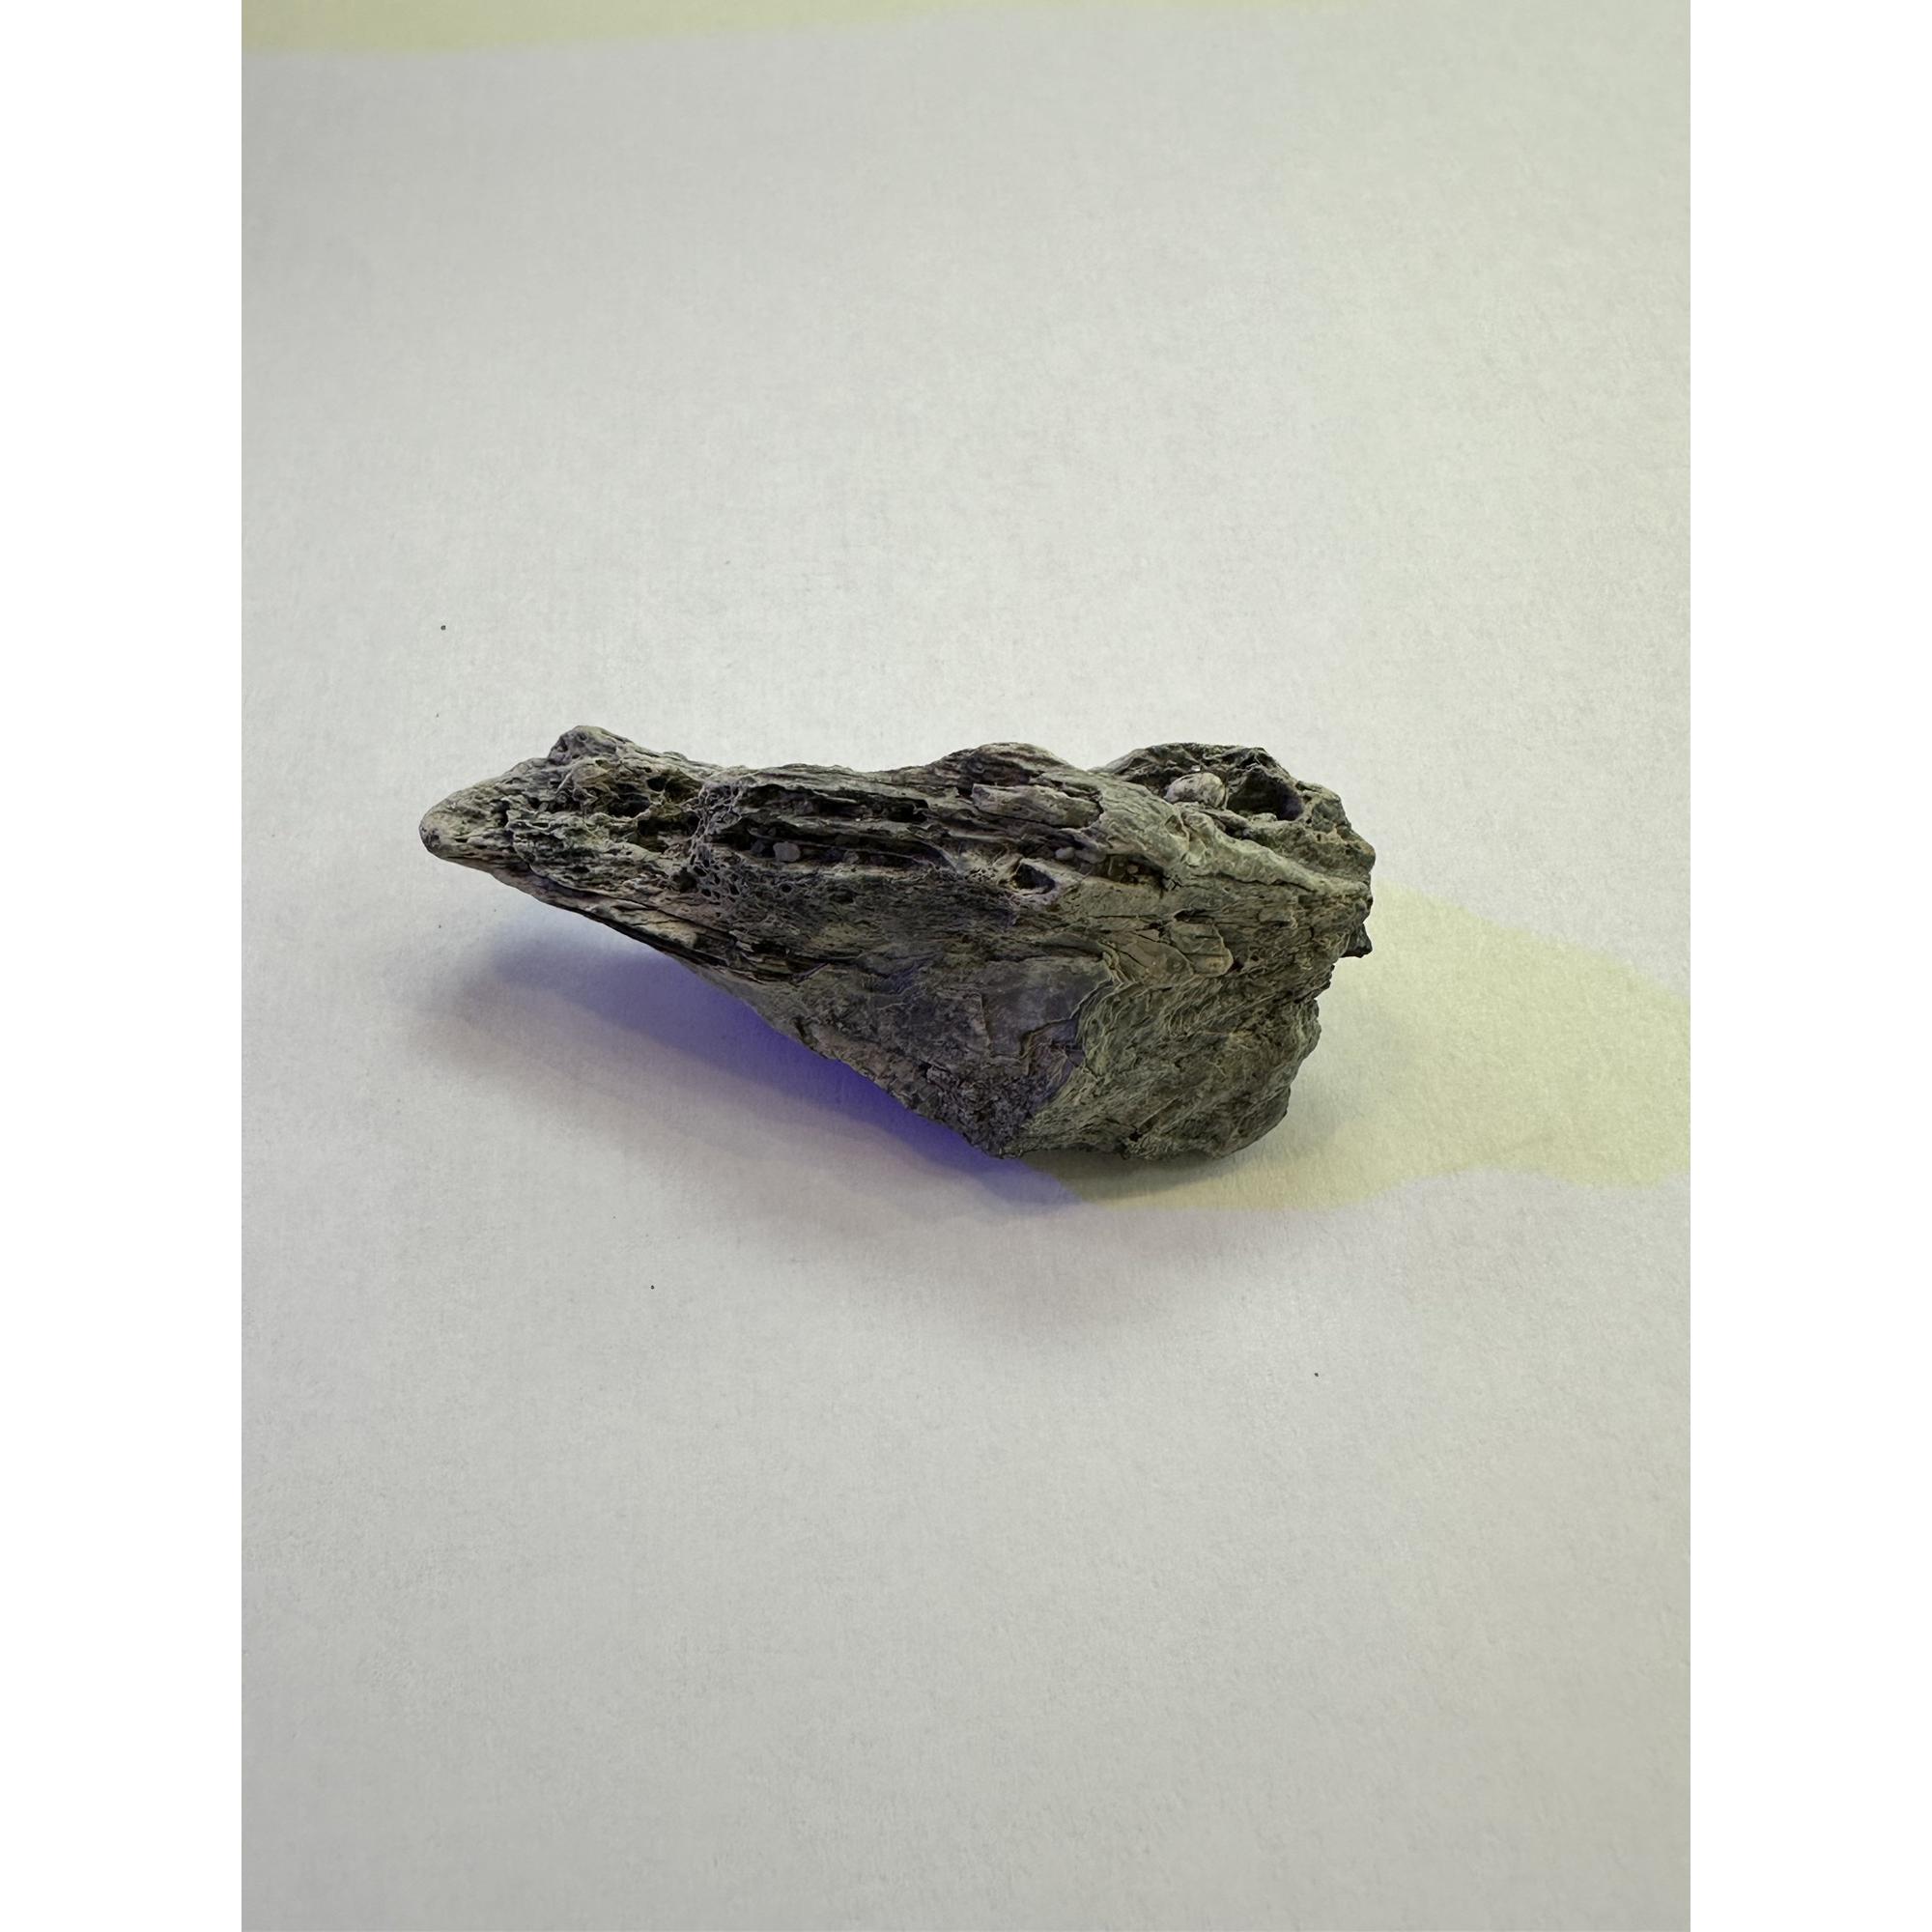 Alligator fossil Squamosal Skull Piece, Florida Prehistoric Online